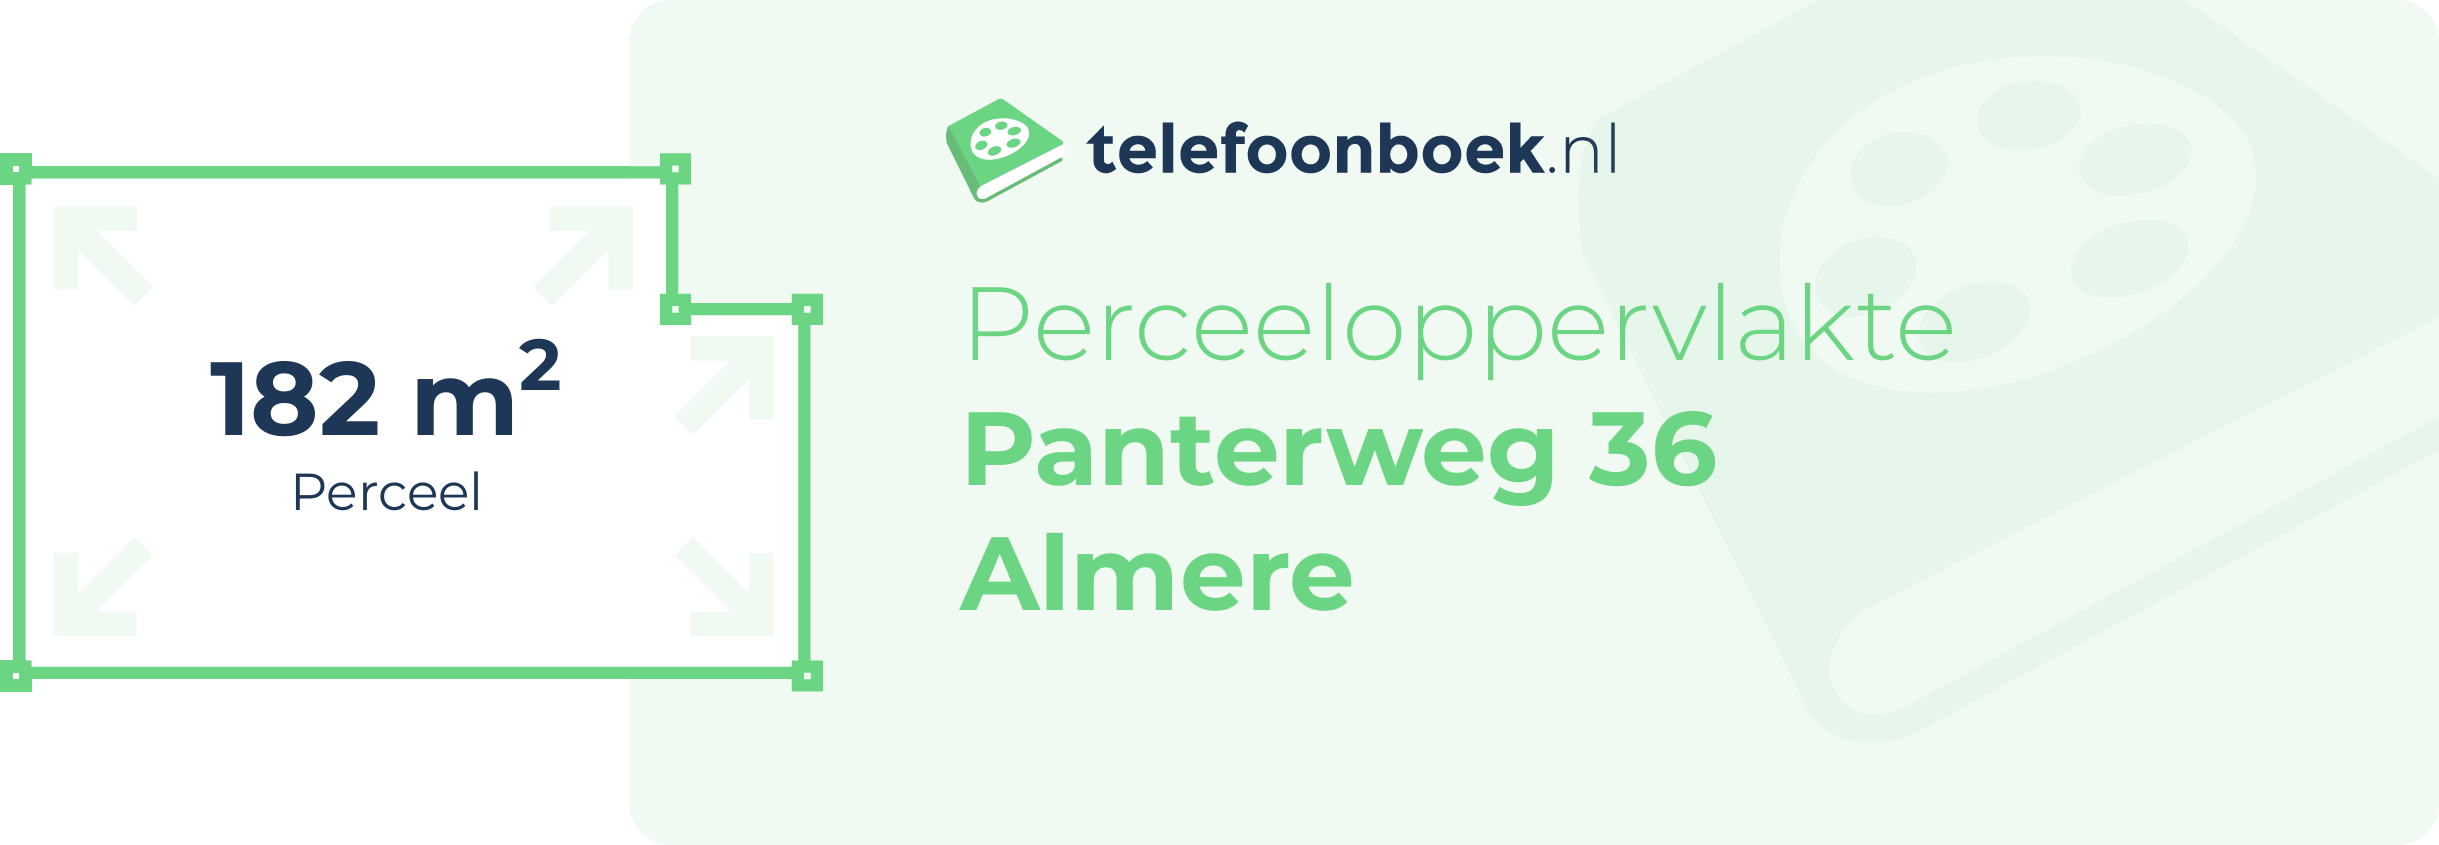 Perceeloppervlakte Panterweg 36 Almere